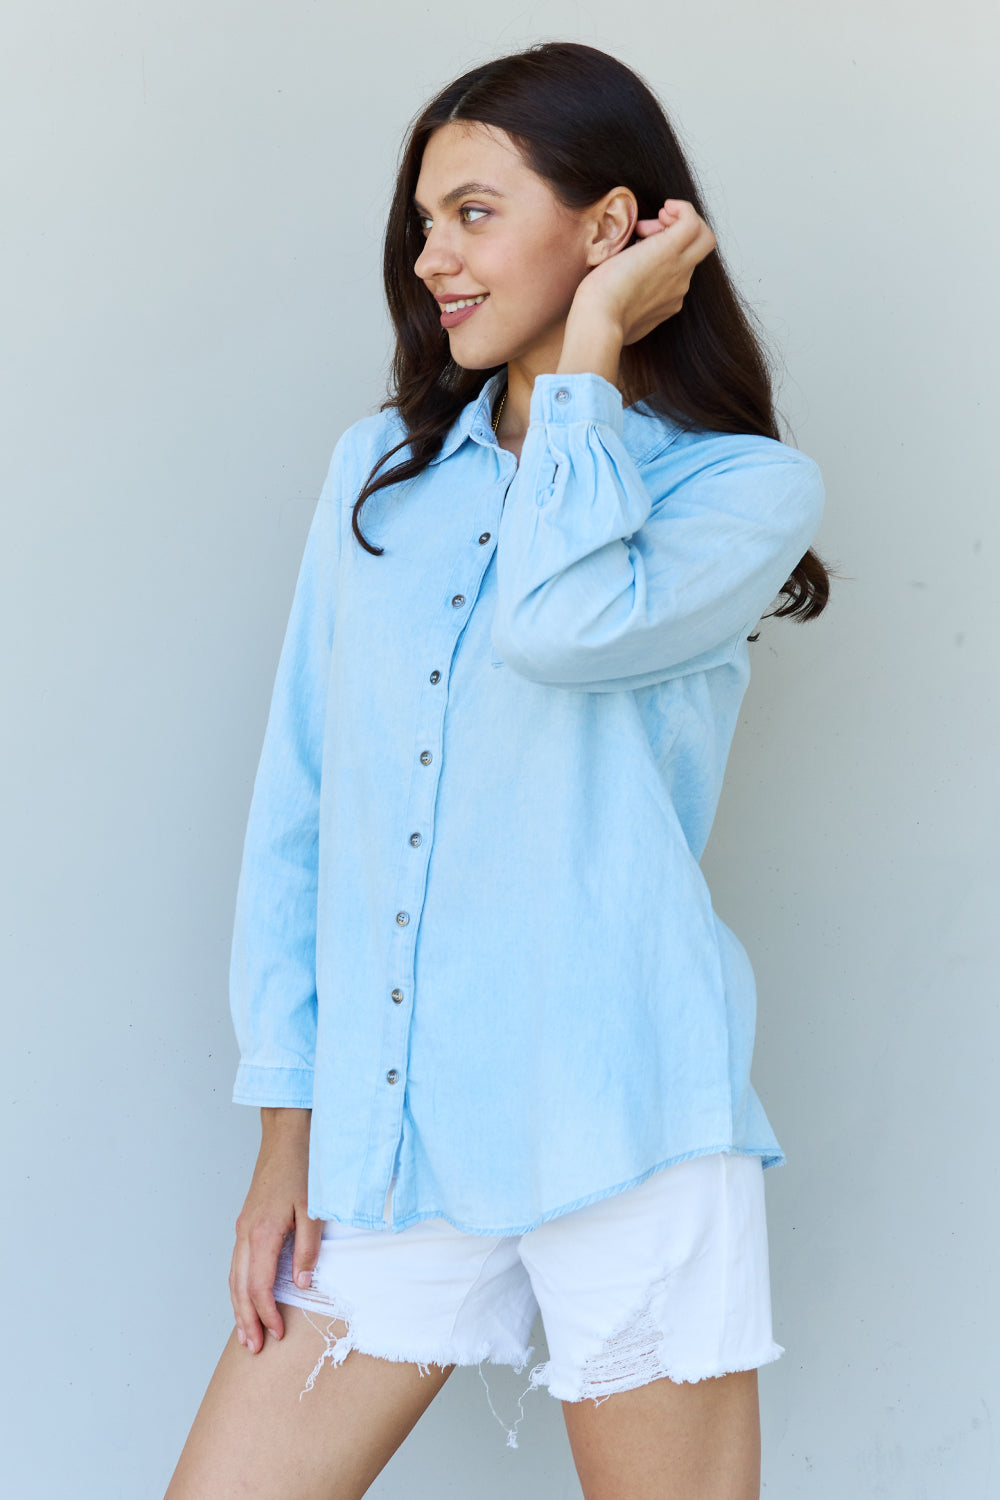 Doublju Blue Jean Baby Denim Button Down Shirt Top in Light Blue  Krazy Heart Designs Boutique   